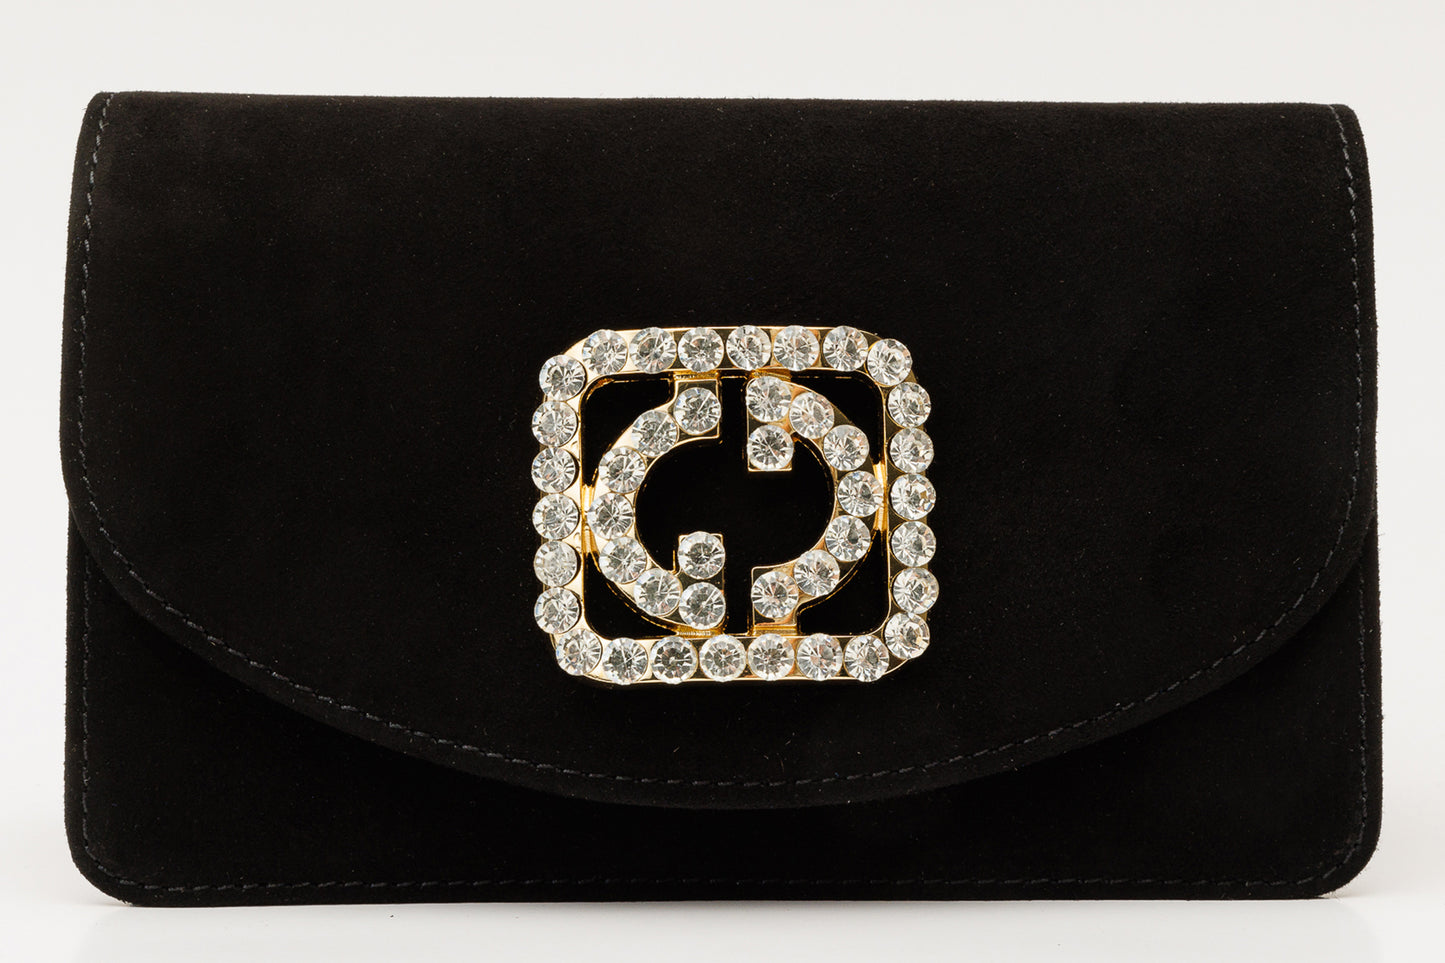 The California Black Suede Leather Handbag